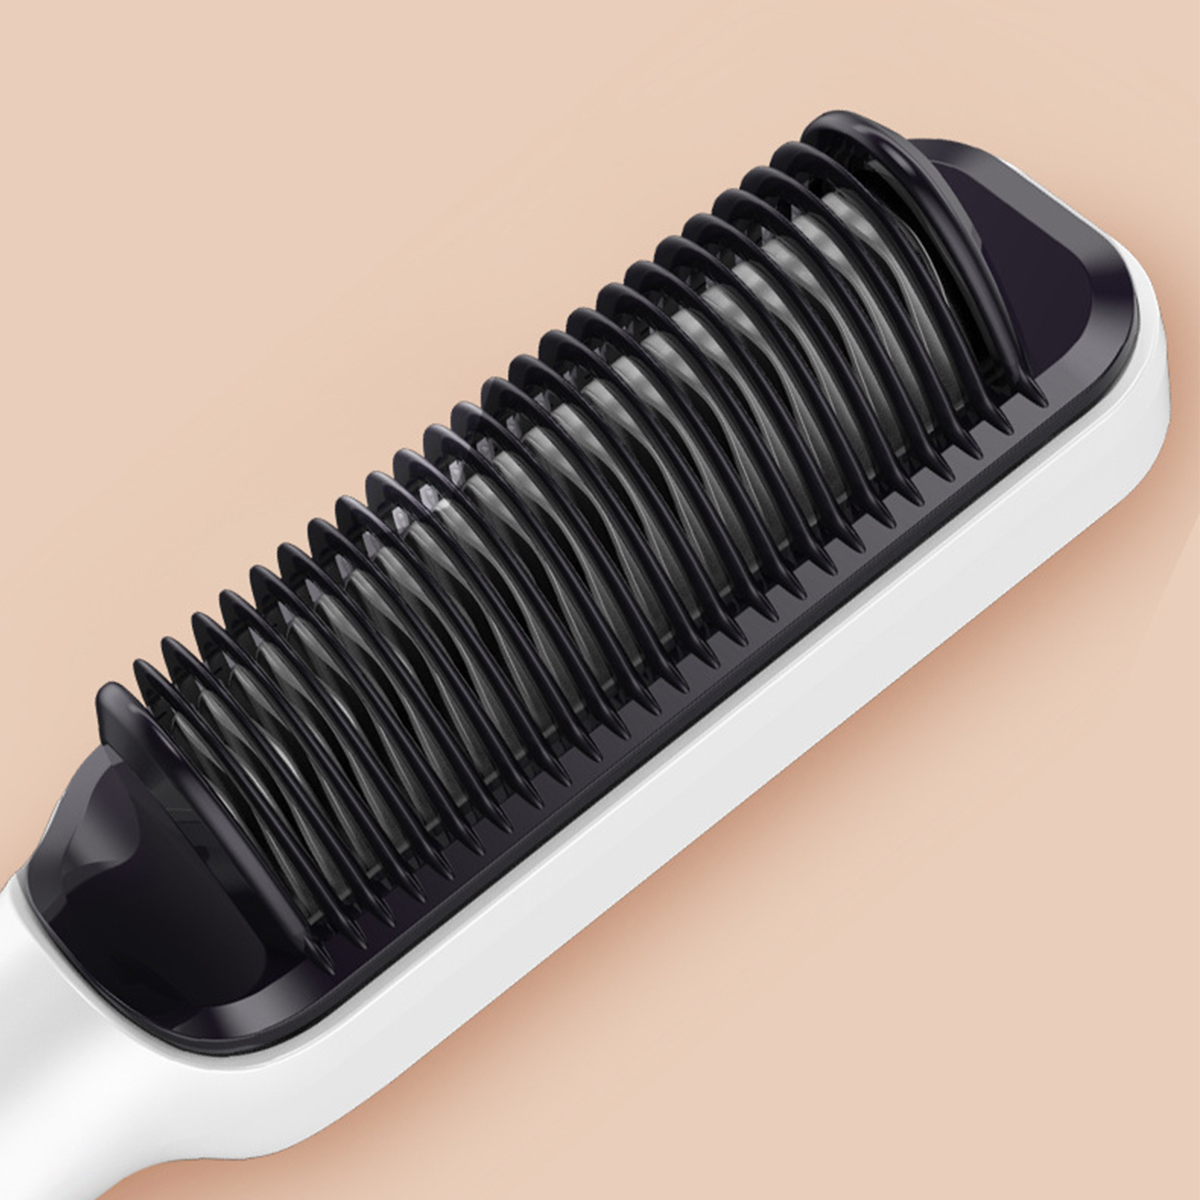 BRIGHTAKE Haarglätter Kamm: 10 Tragbar Hitze, Haarglättungskamm, 36h Styling, 4 Sofortige Sek. Temperaturstufen